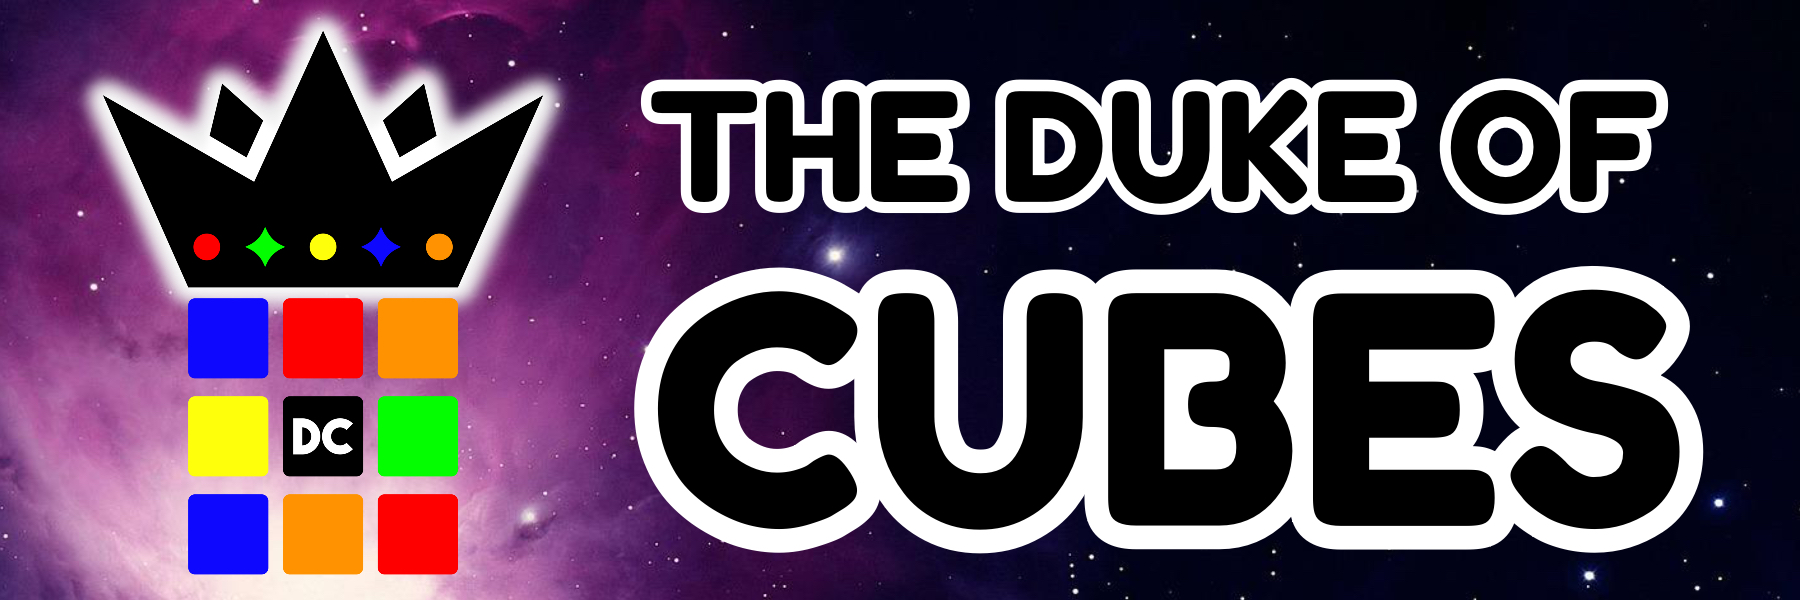 Amazing 4x4 Algorithm Cube Patterns - The Duke of Cubes